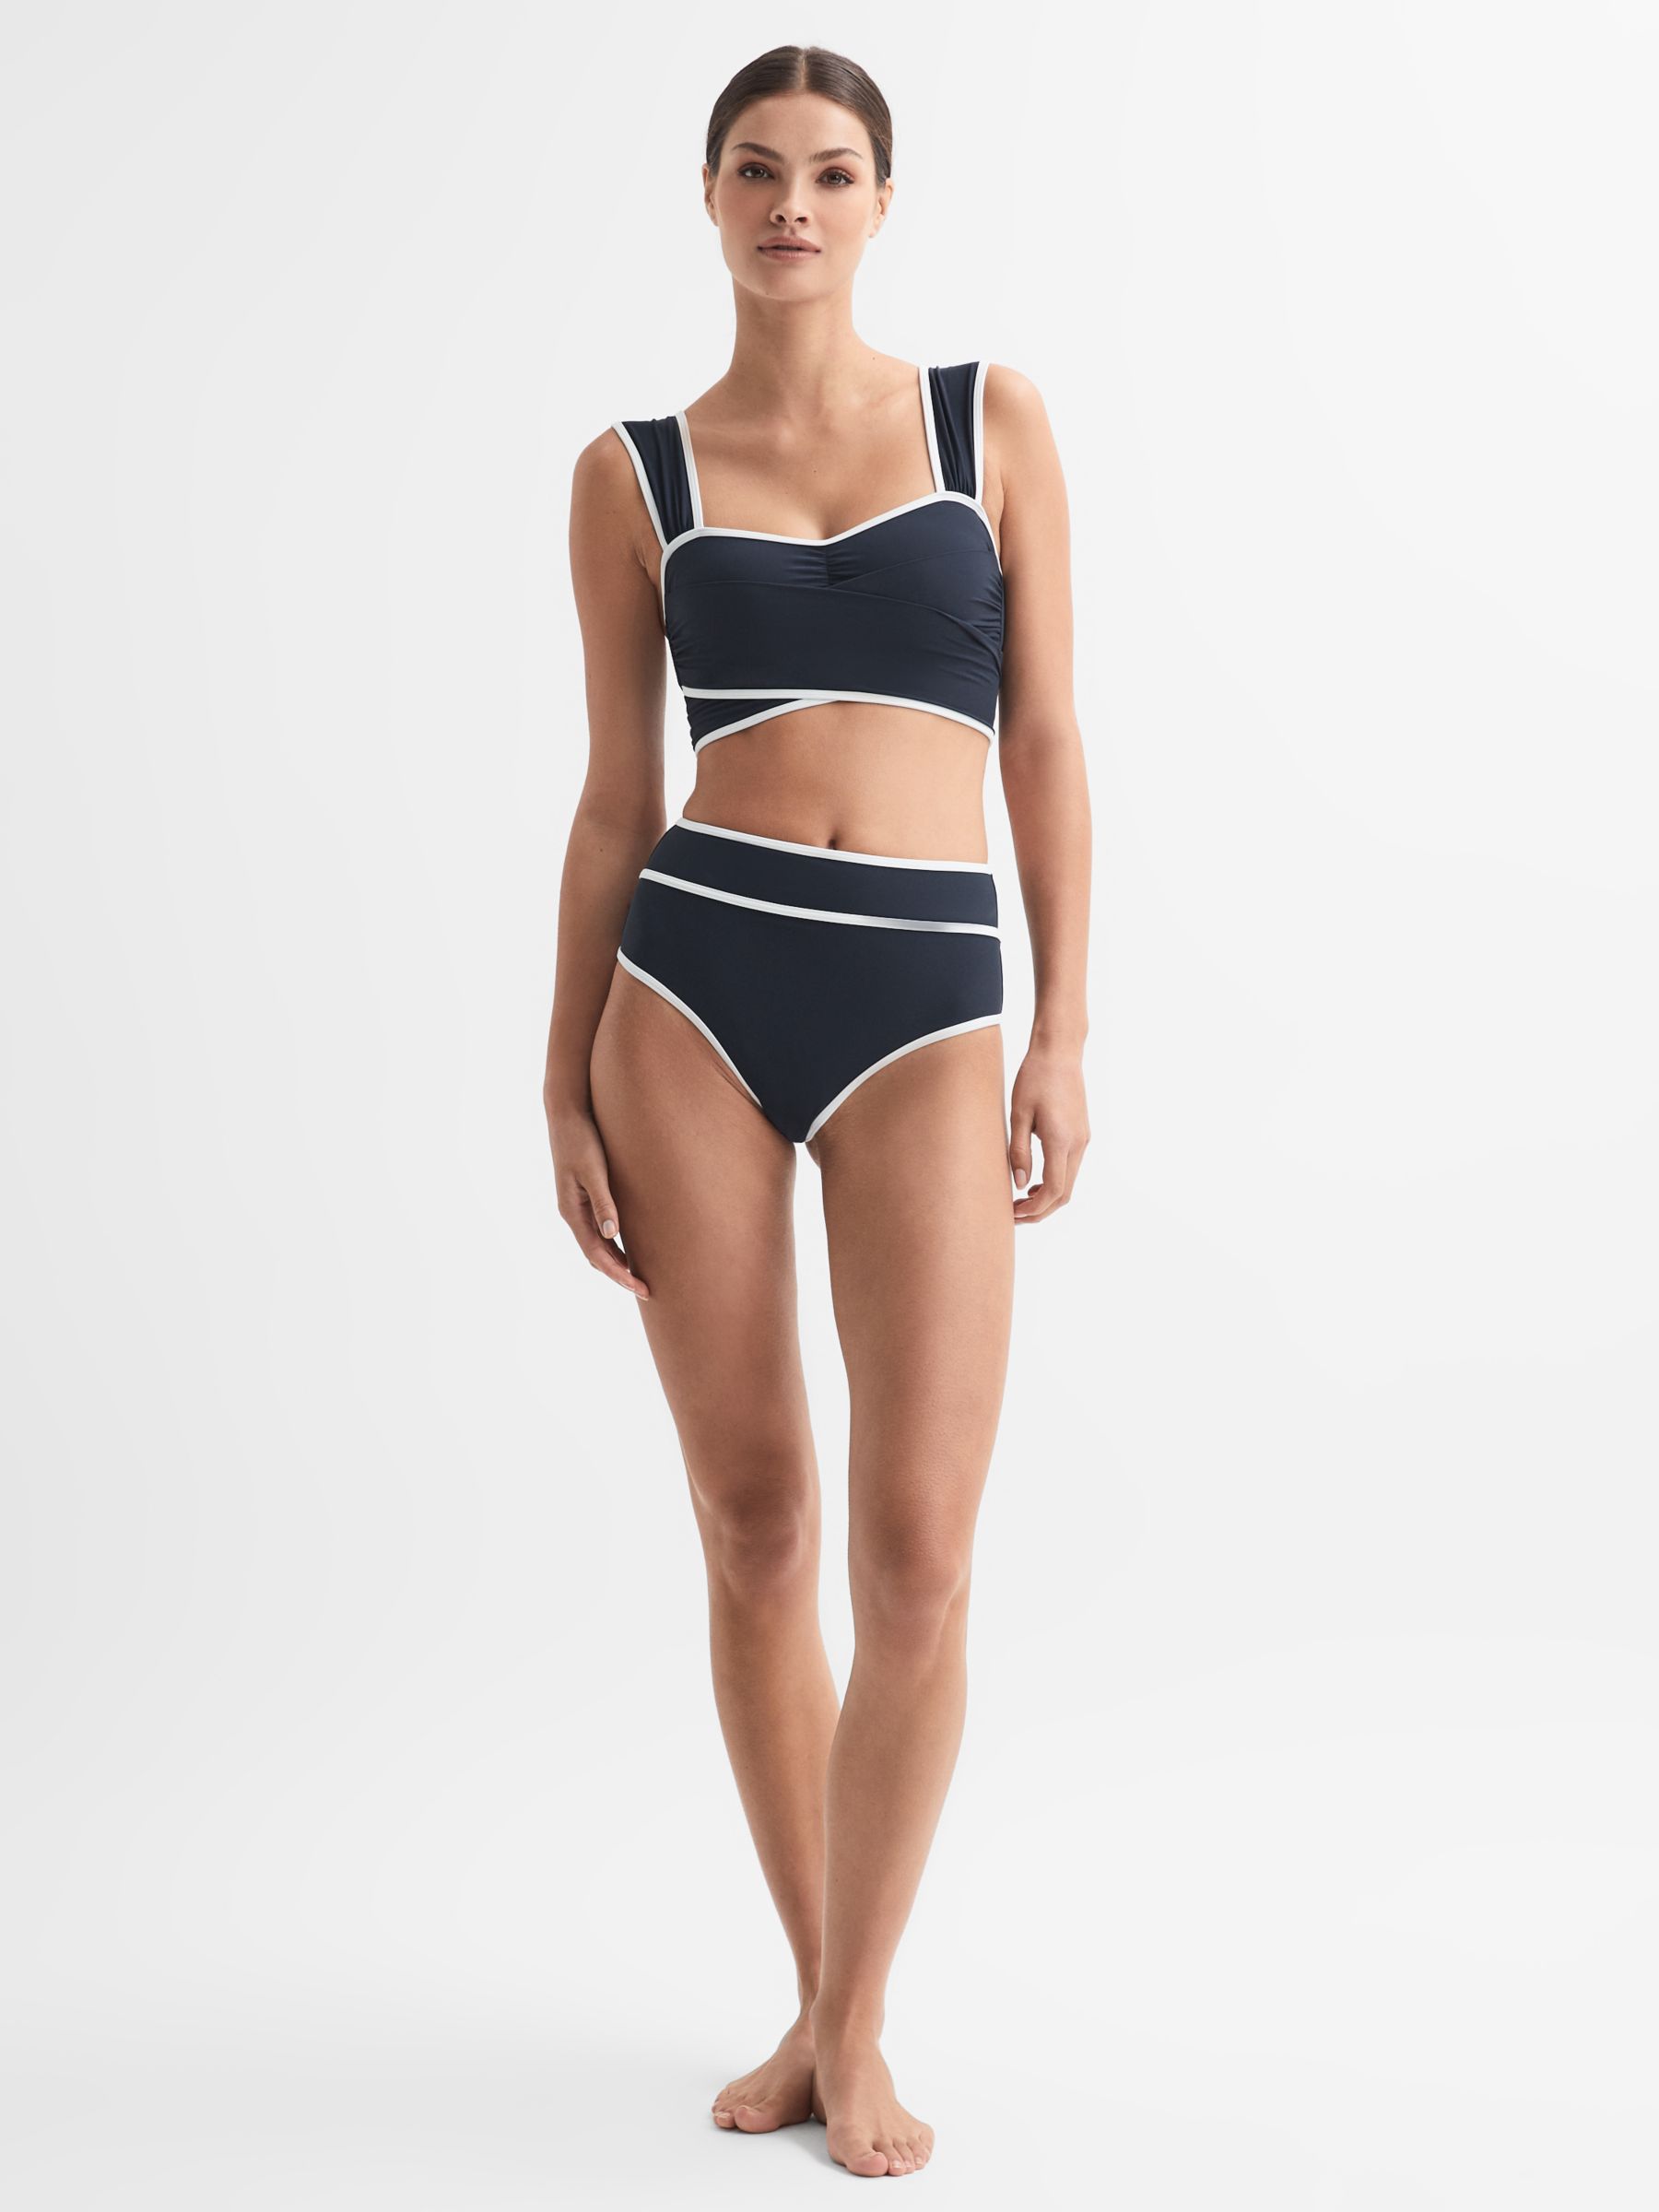 Reiss Cristina Contrast Seam Wrap Bikini Top, Navy/White, 6